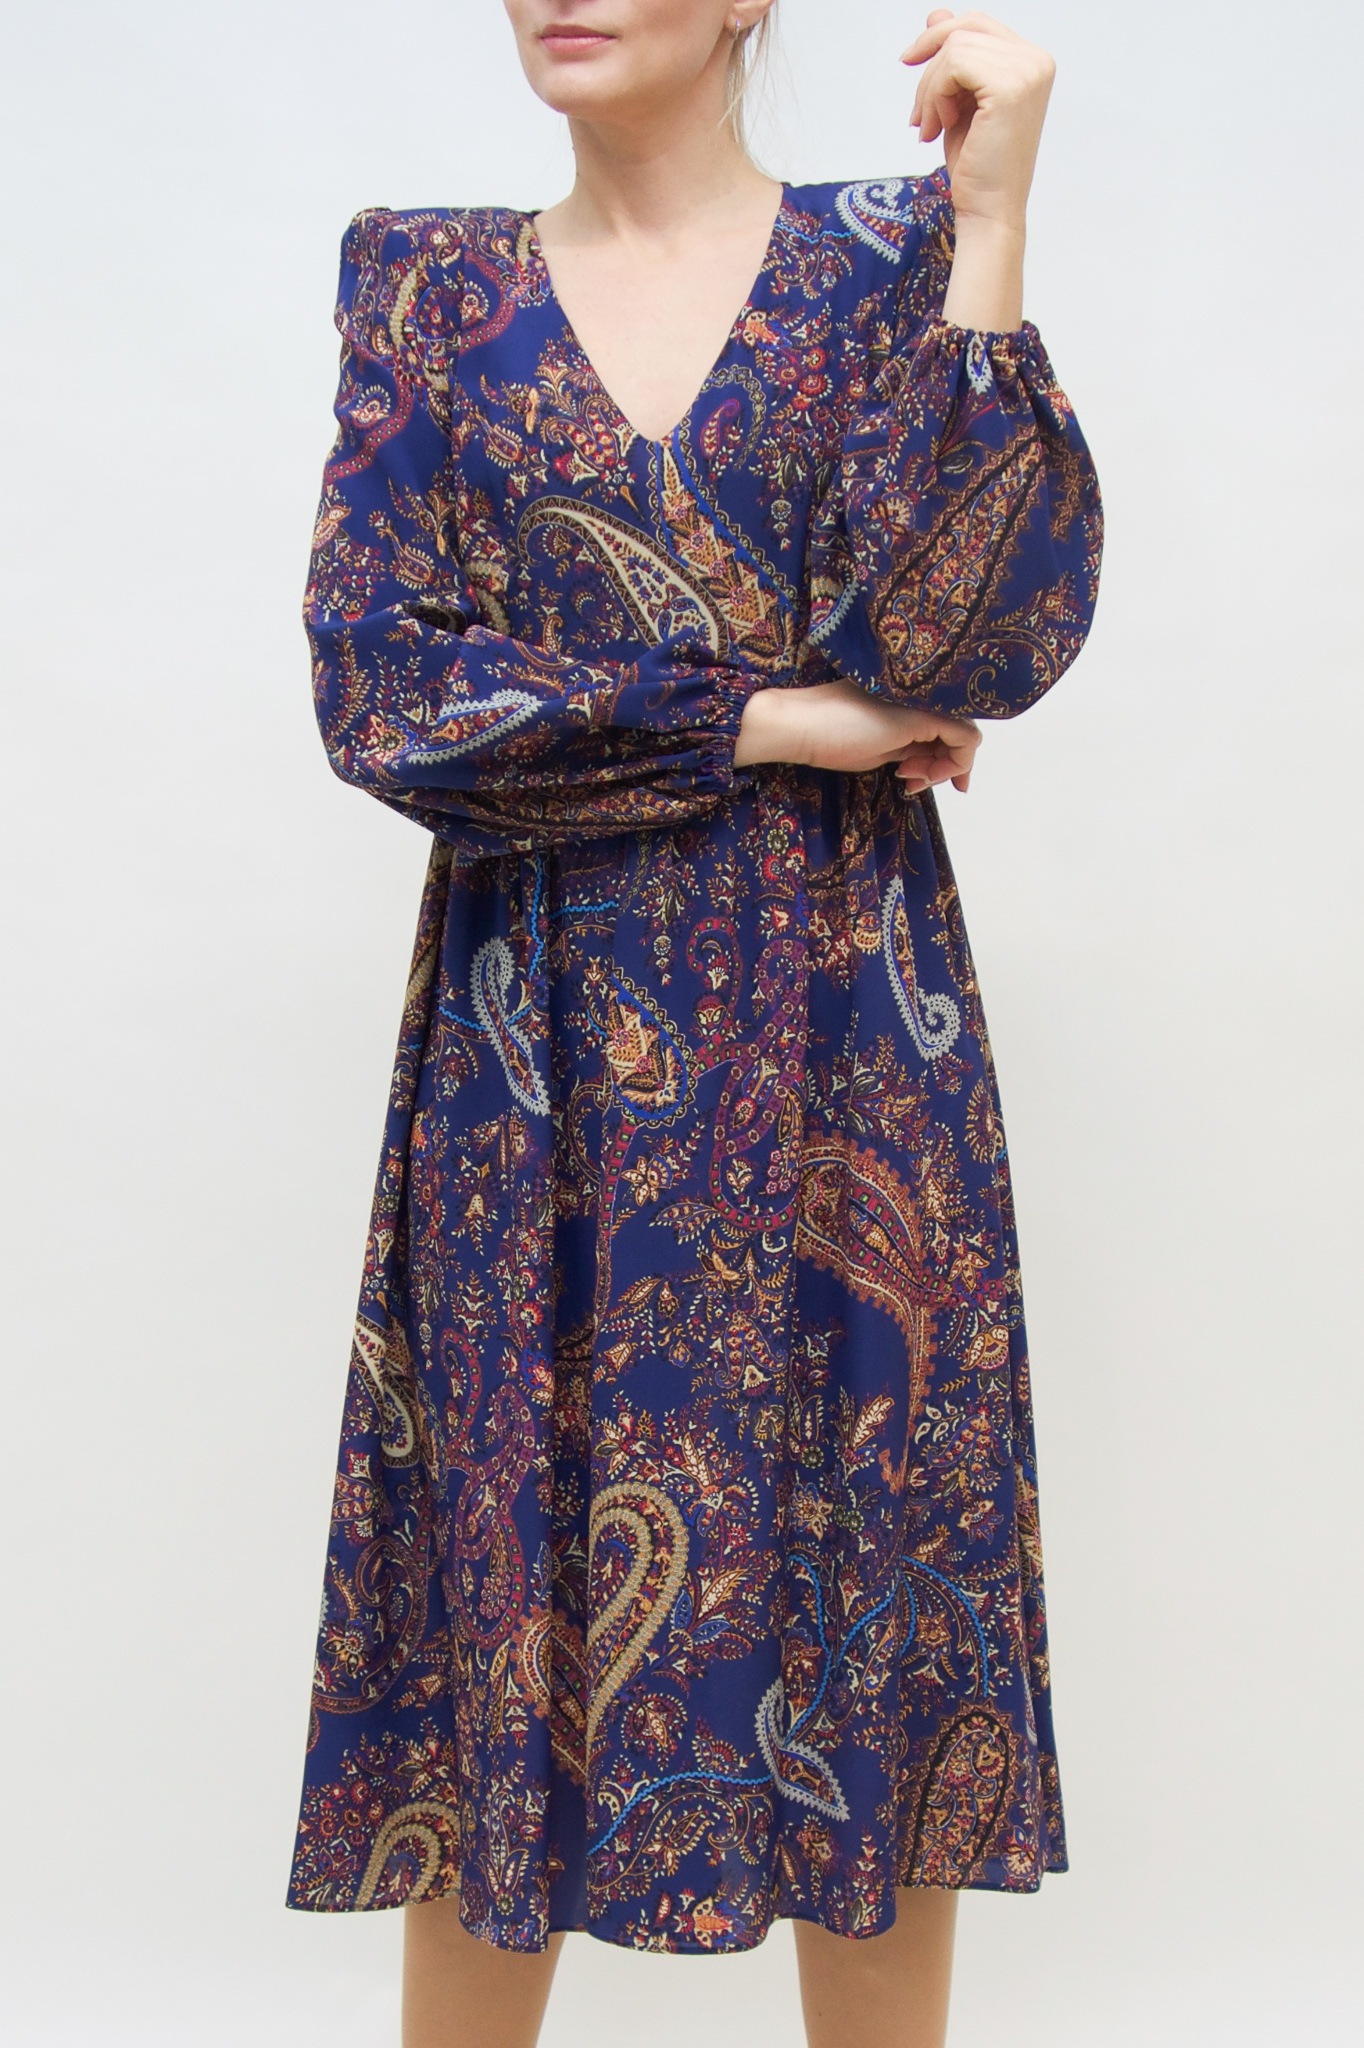 etro kleid royal blau mit allover paisley muster | boutique61.de